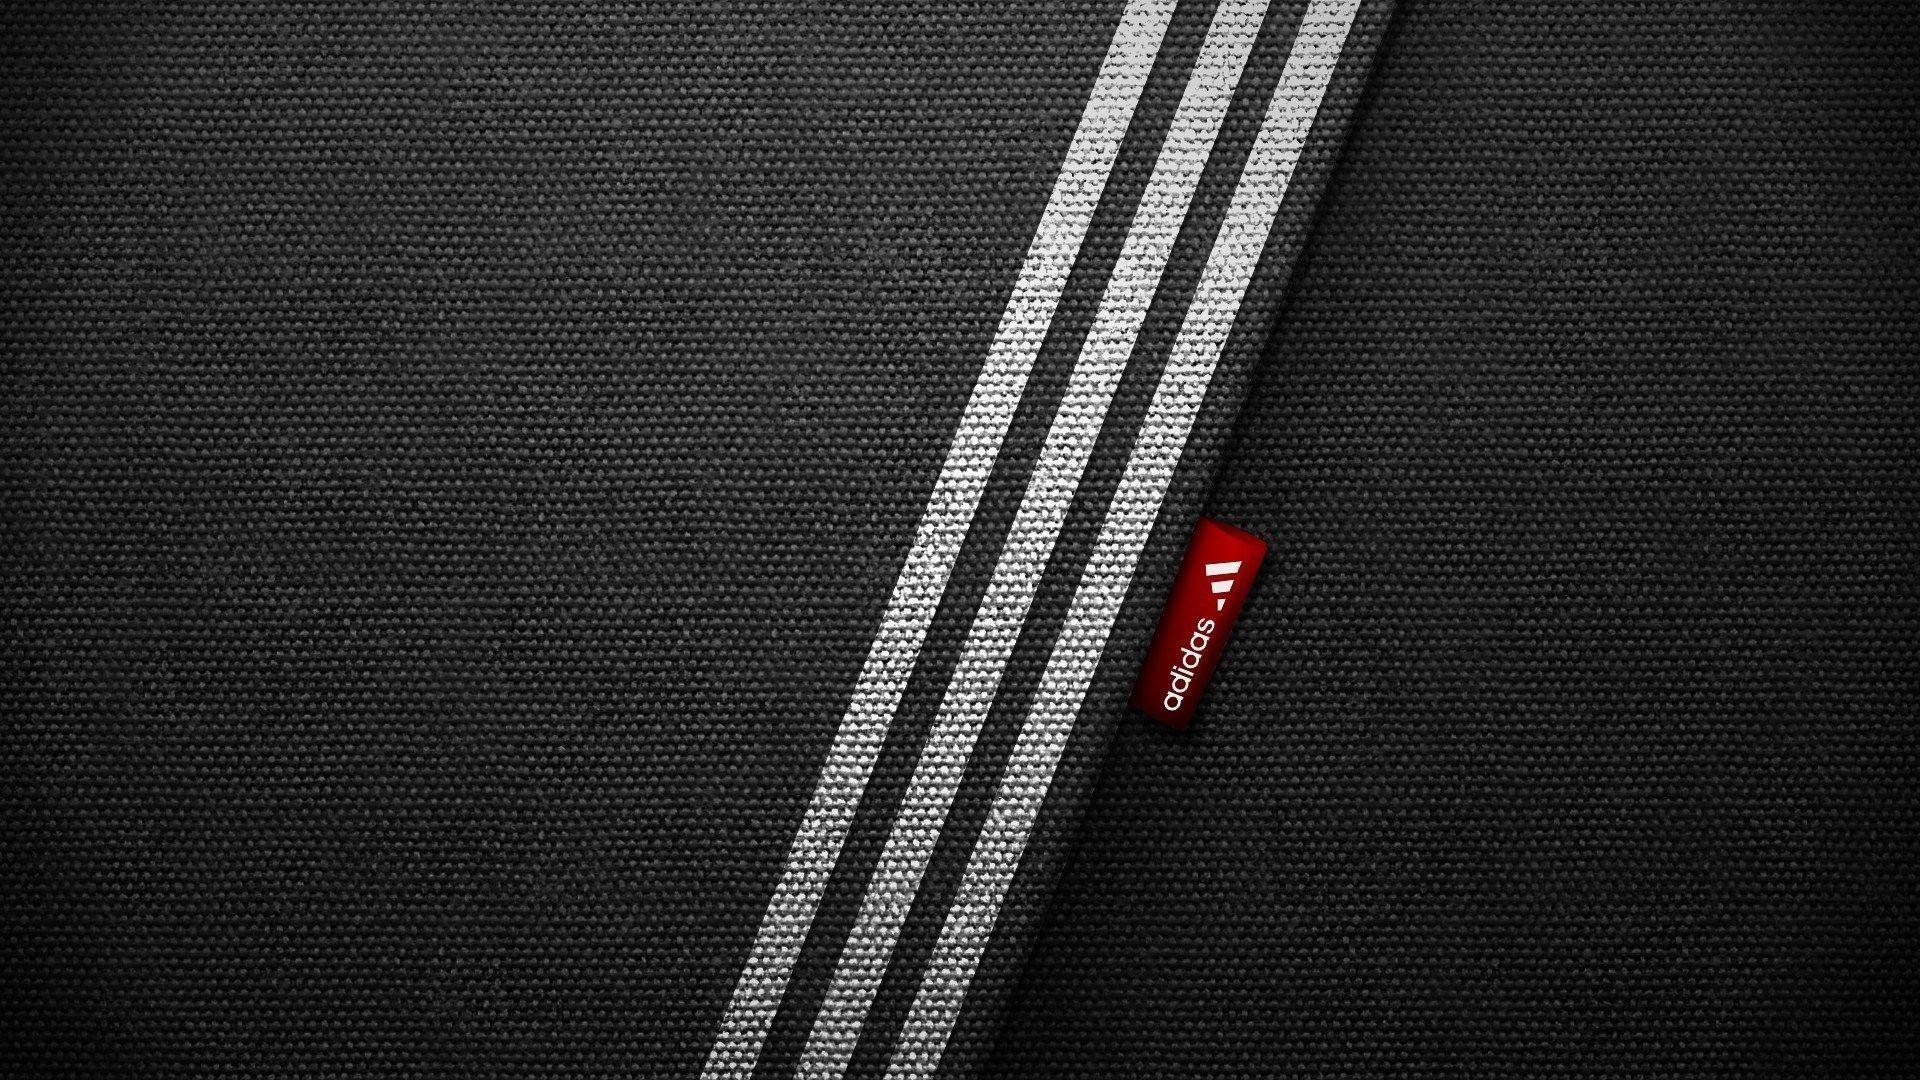 Adidas Brand Logo Hd Wallpaper Background Uhd 2k 4k 5k 2015 2016